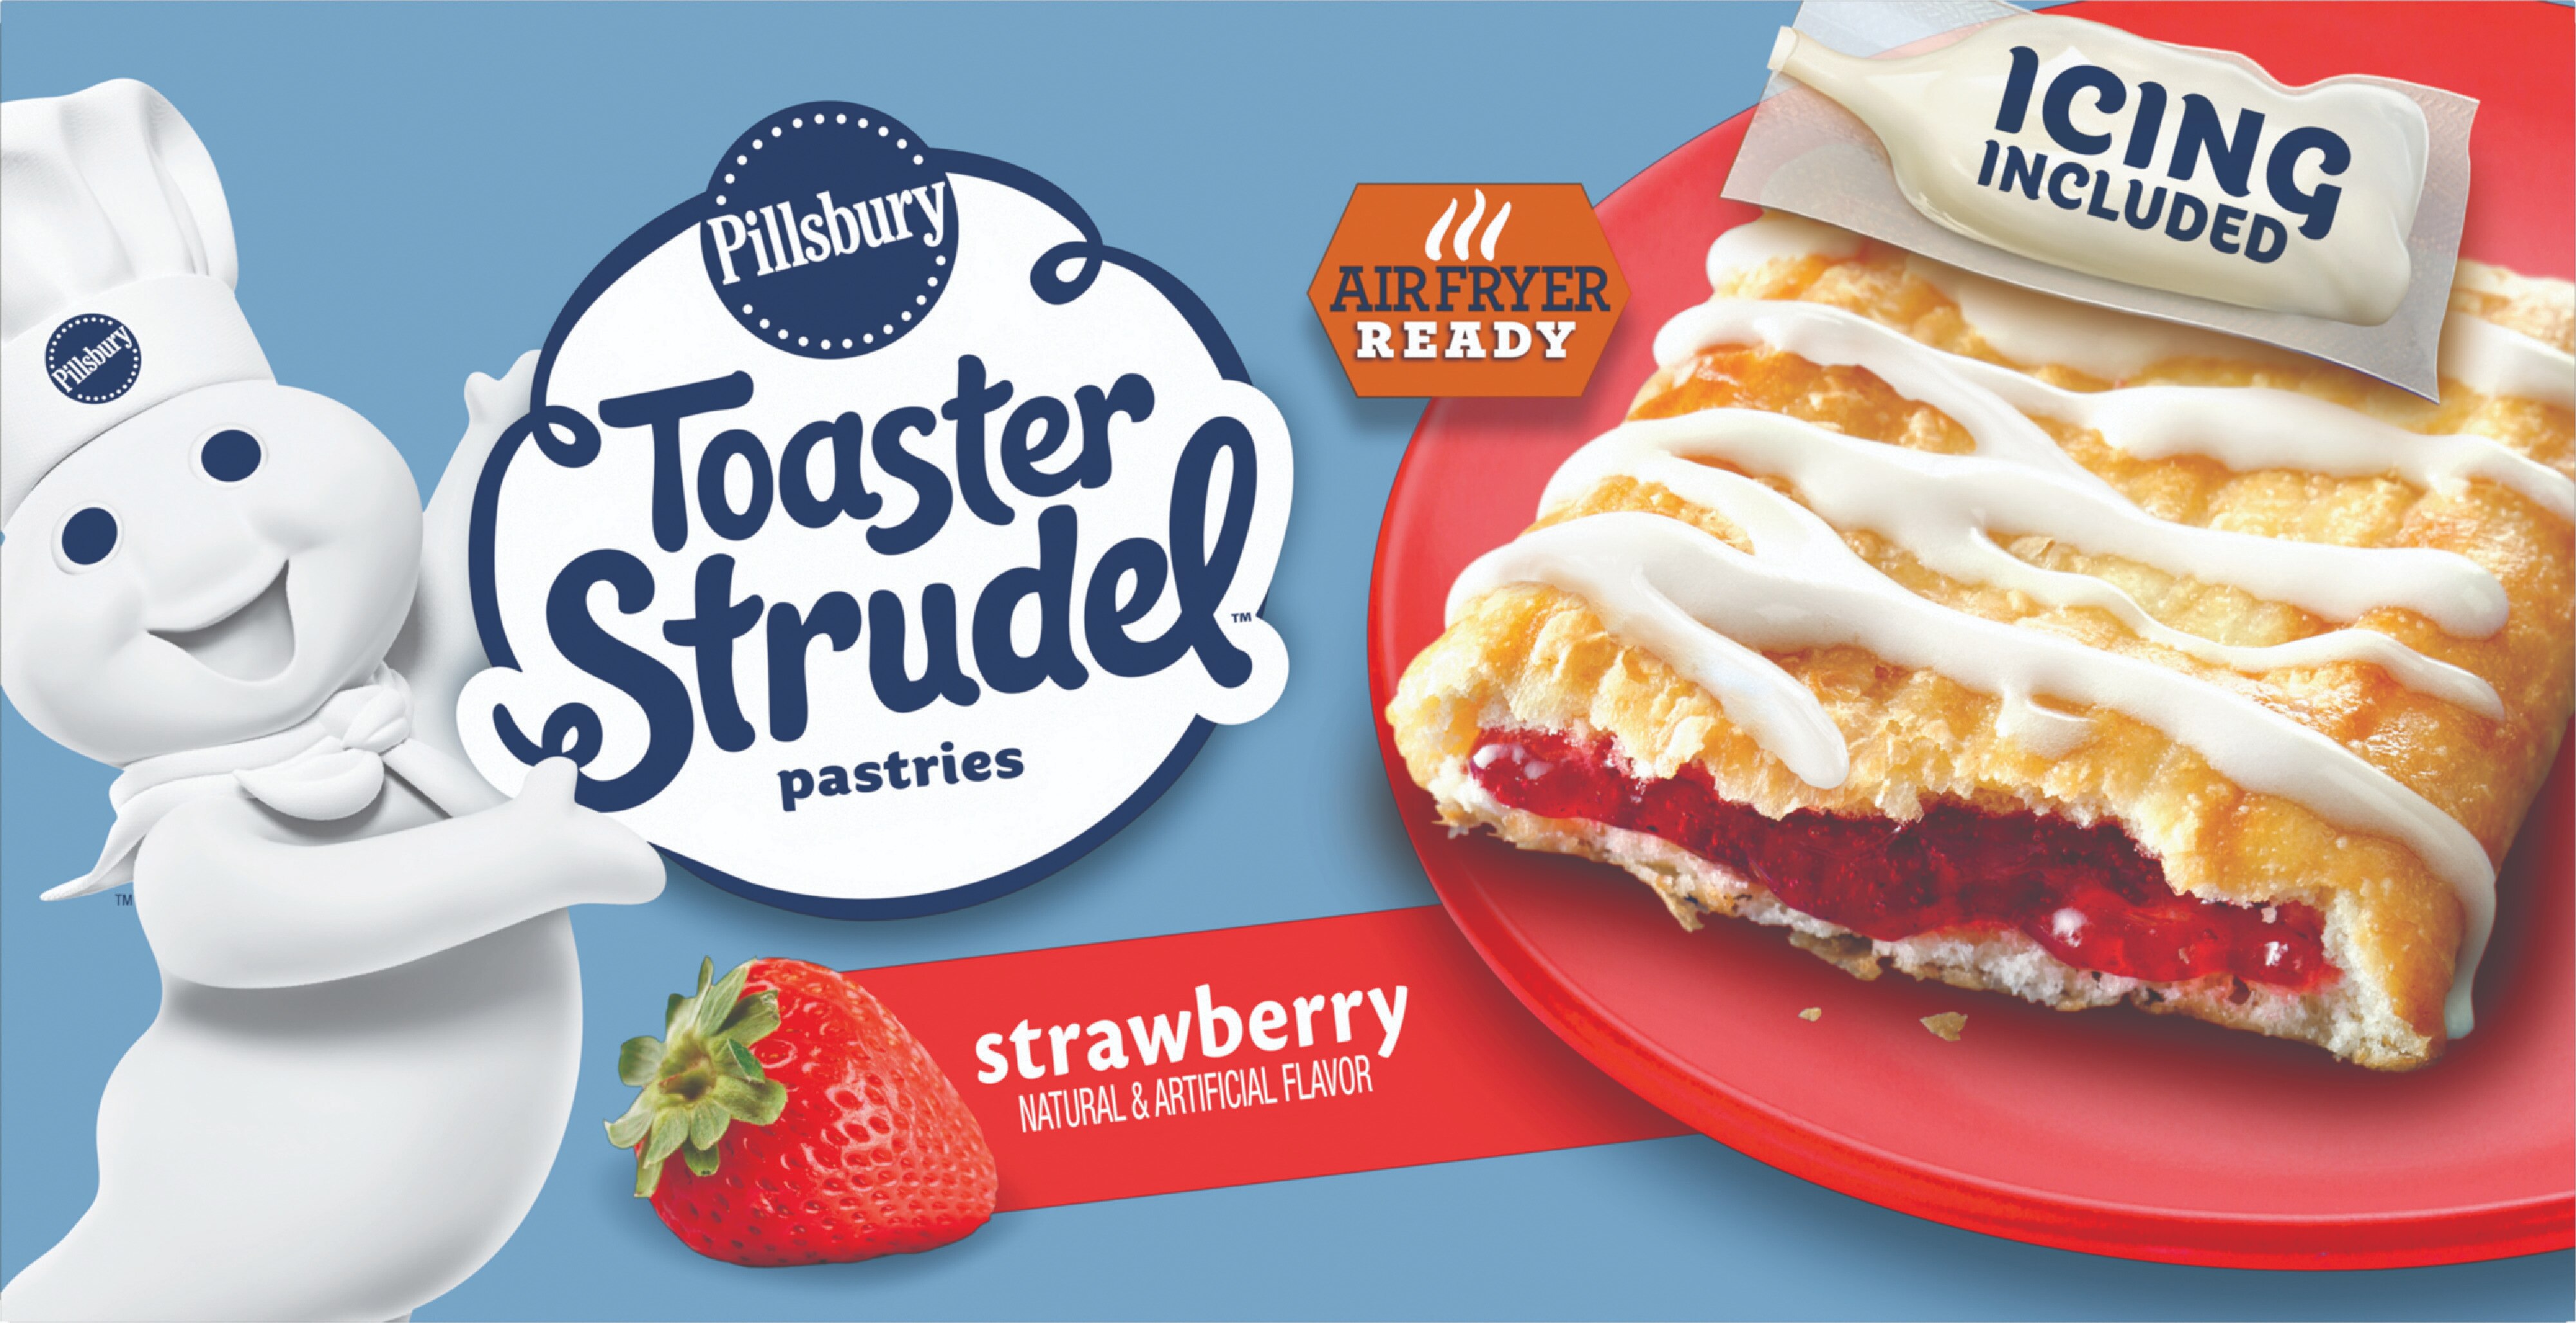 Pillsbury Toaster Strudel Strawberry, 6 ct, 11.7 oz